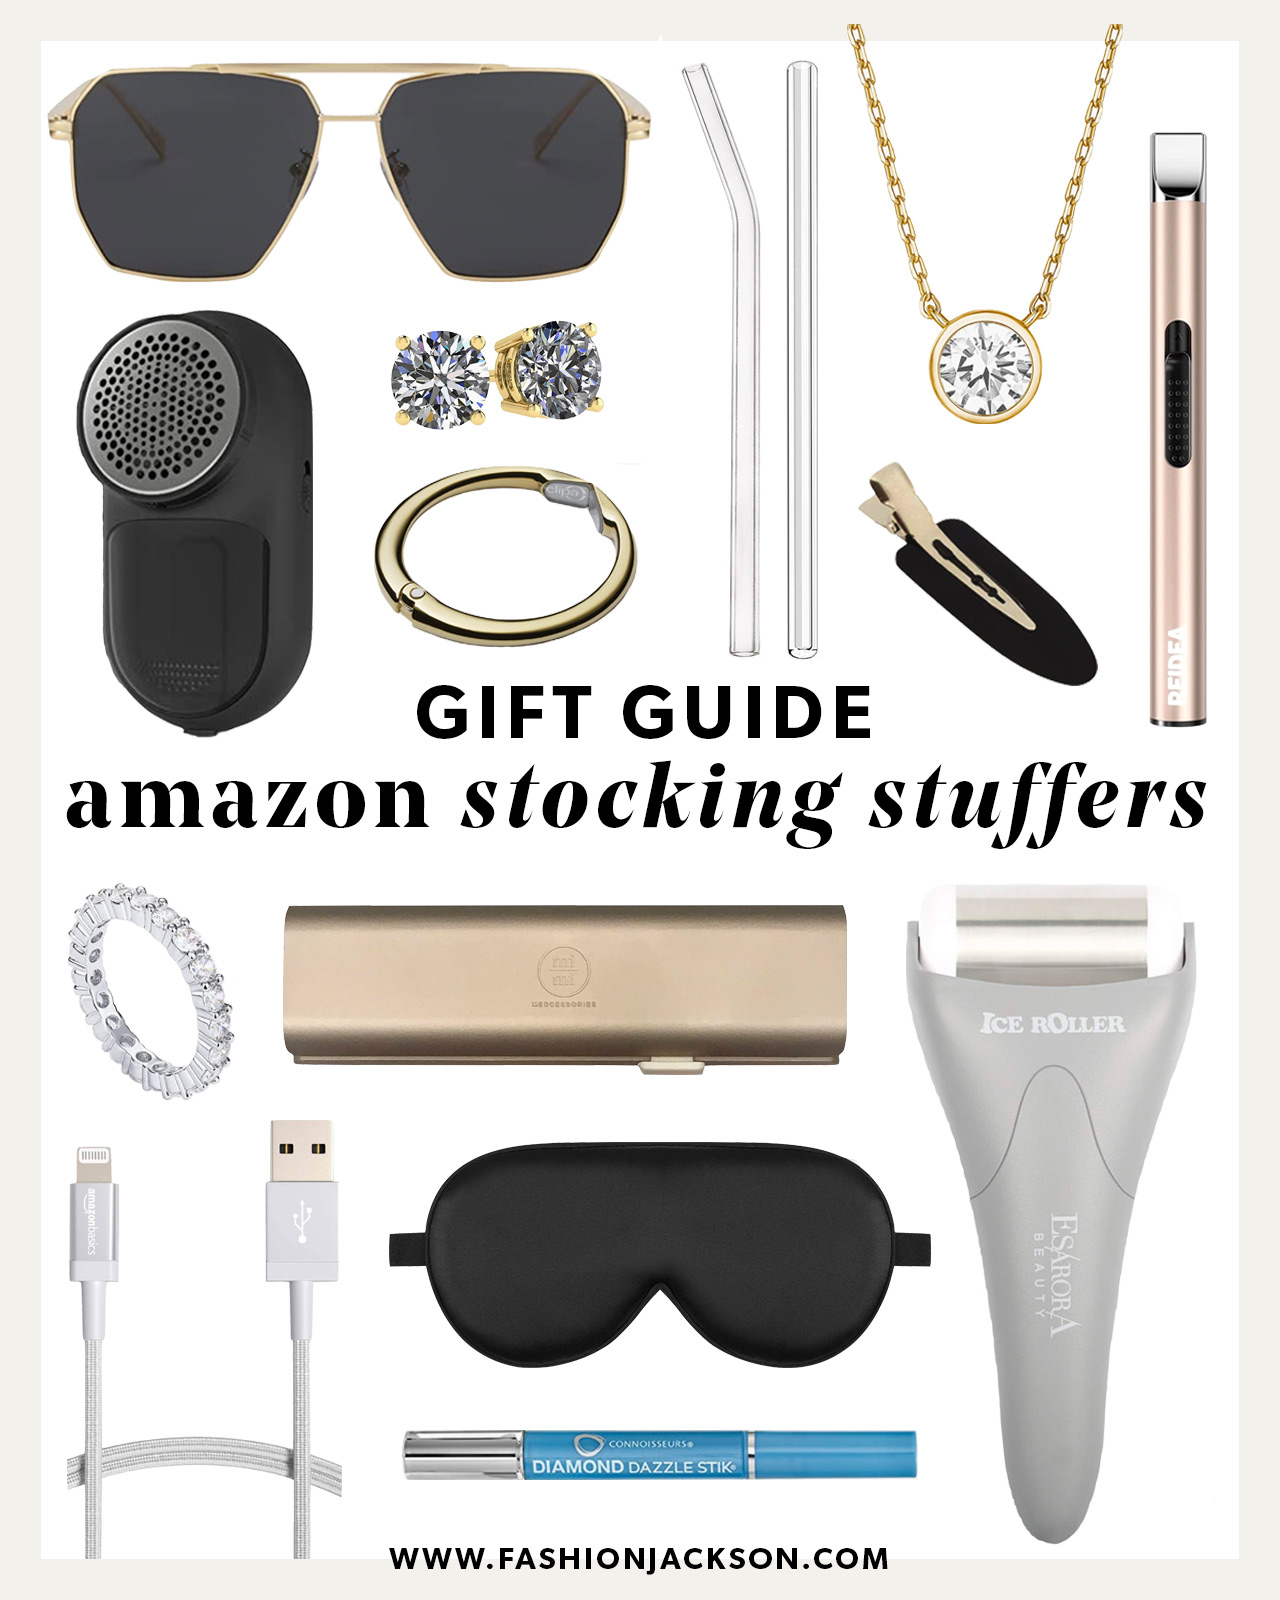 amazon stocking stuffers holiday gift guide